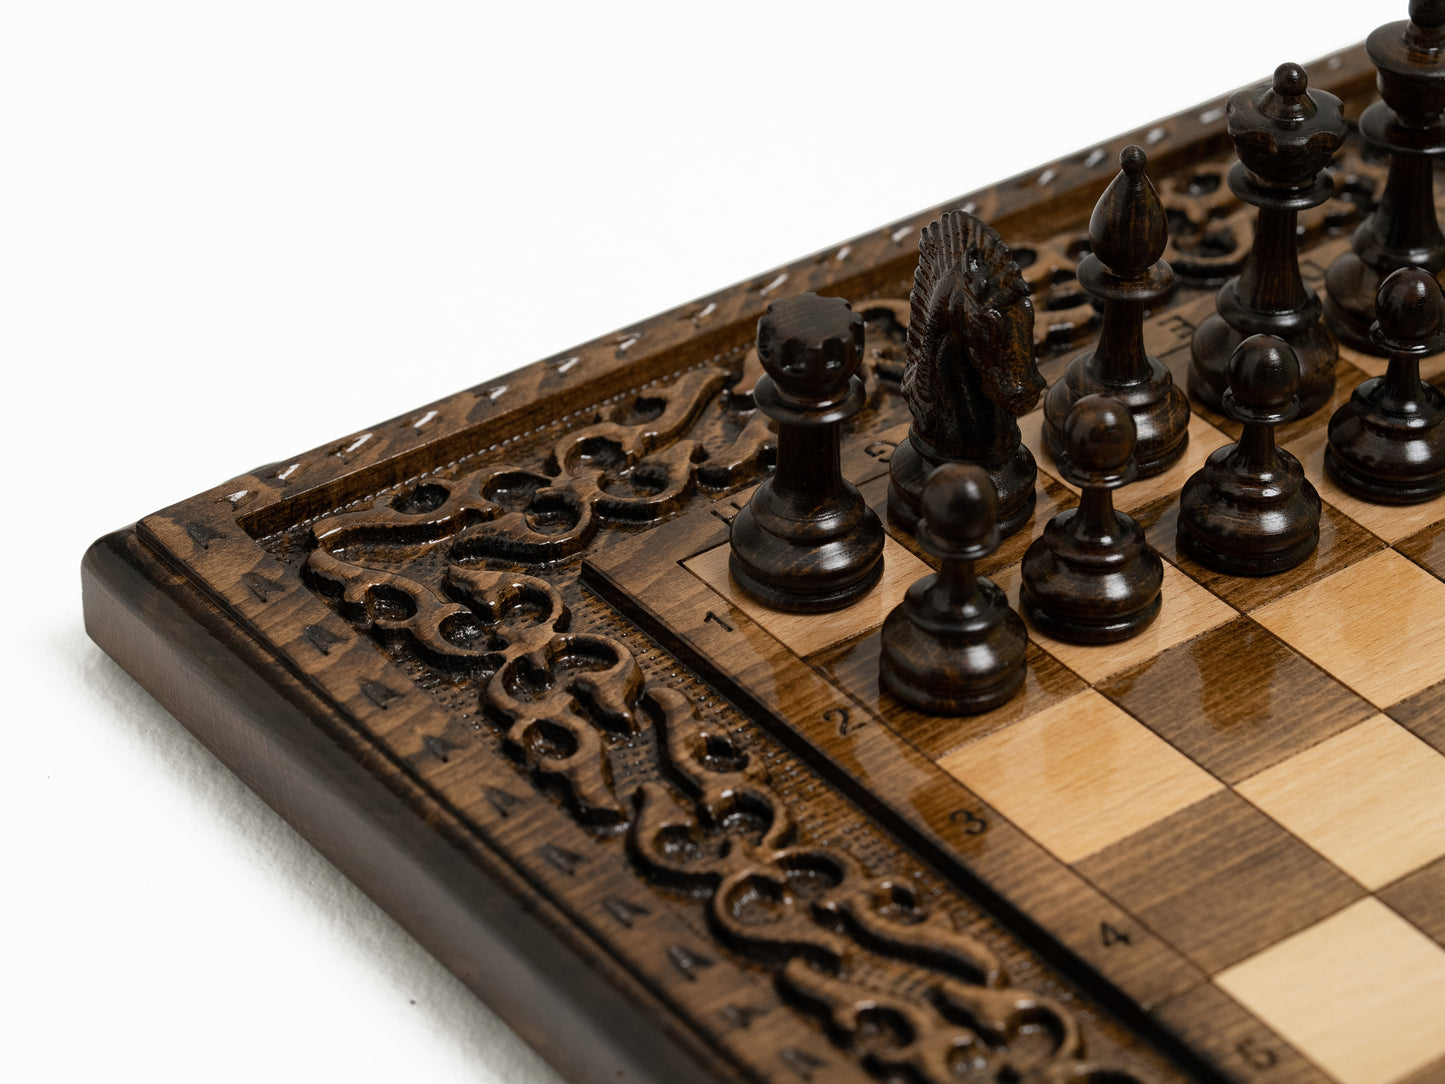 Artisan Handcrafted Wooden Chess Set - Exquisite Craftsmanship